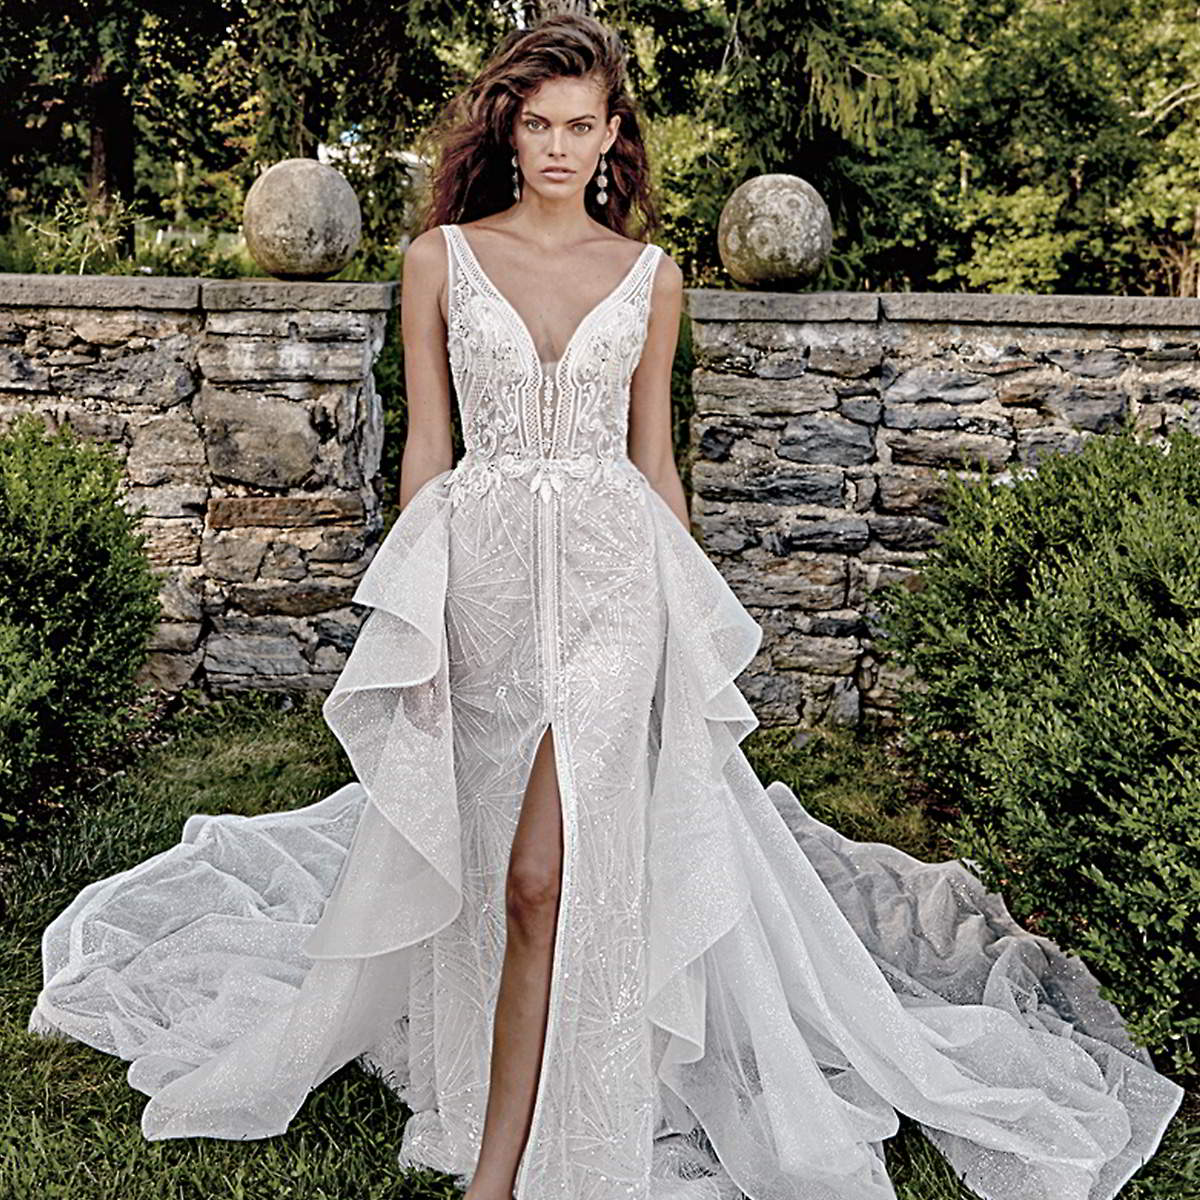 amalia carrara 2021 bridal collection featured on wedding inspirasi